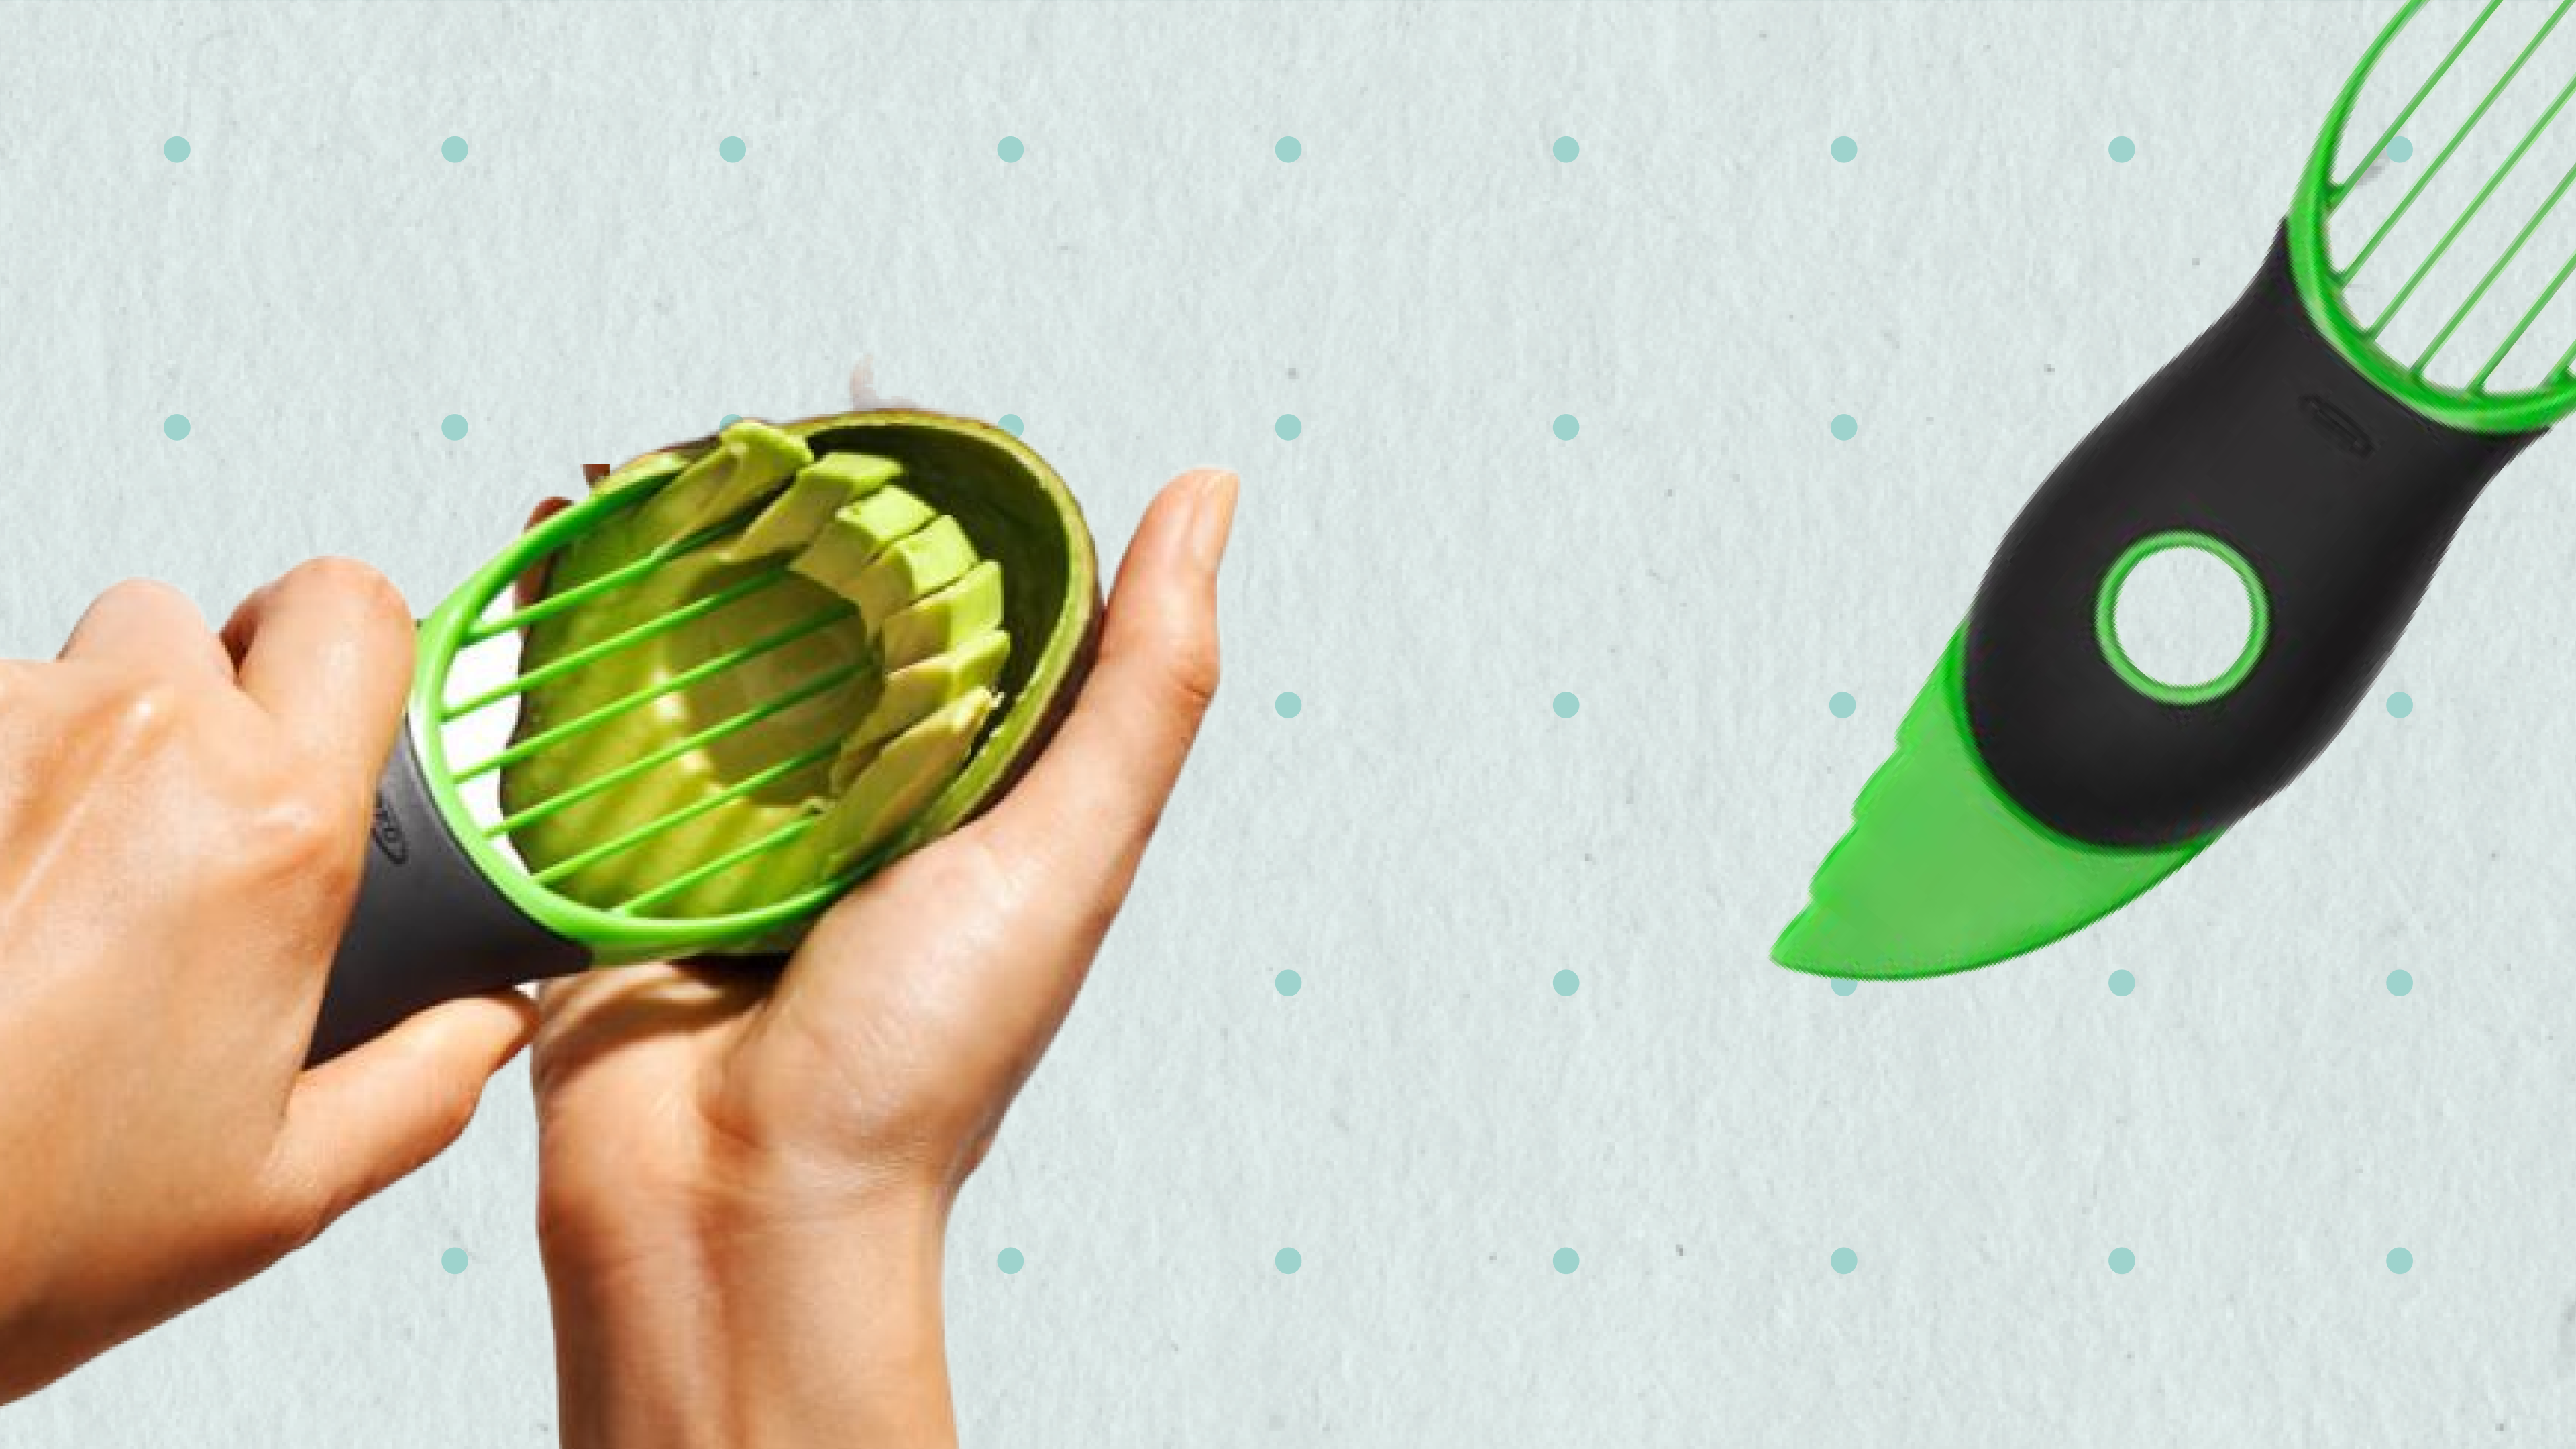 OXO Good Grips 3-in-1 Avocado Slicer - We Want Veggies